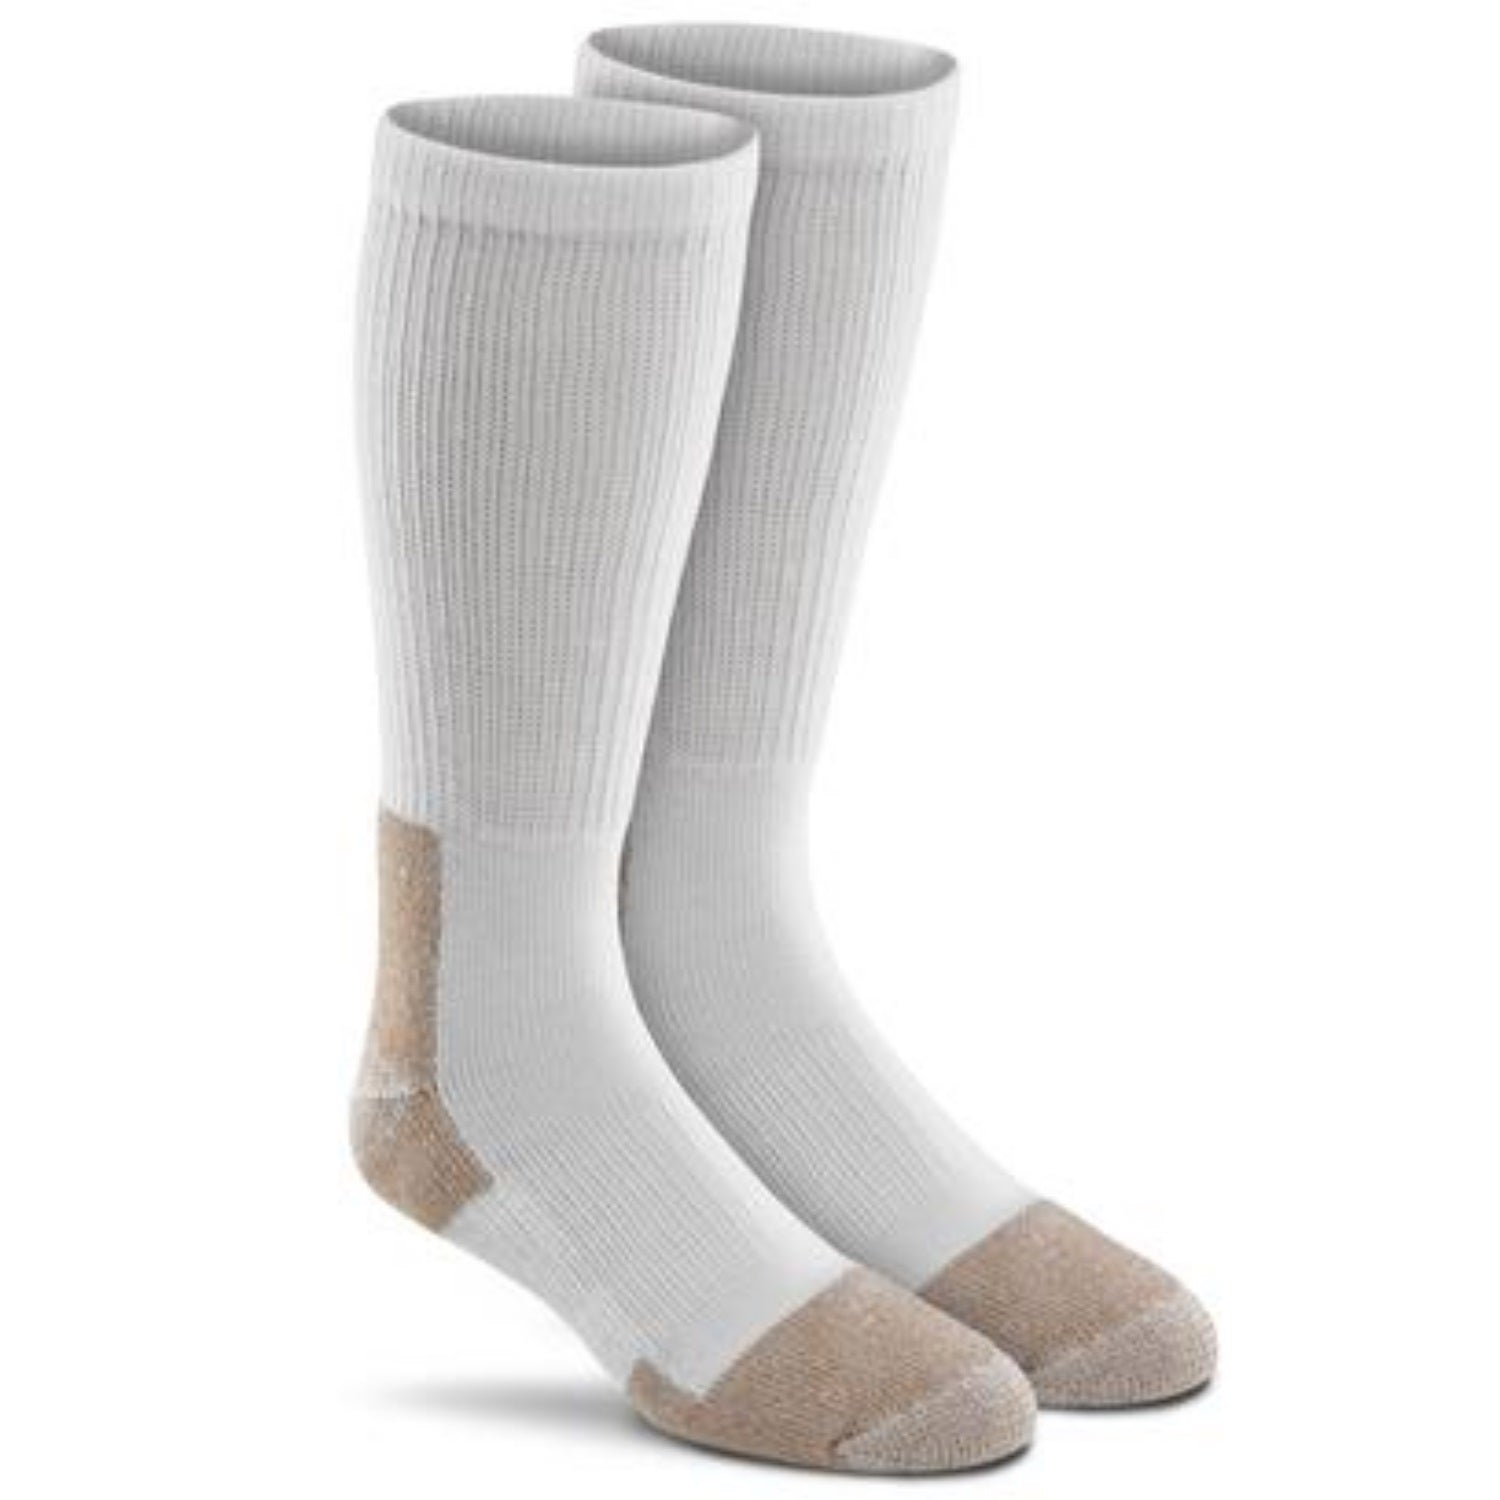 Fox River Socks - Steel Toe Mid Calf Boot Sock (2 Pack) - Men's